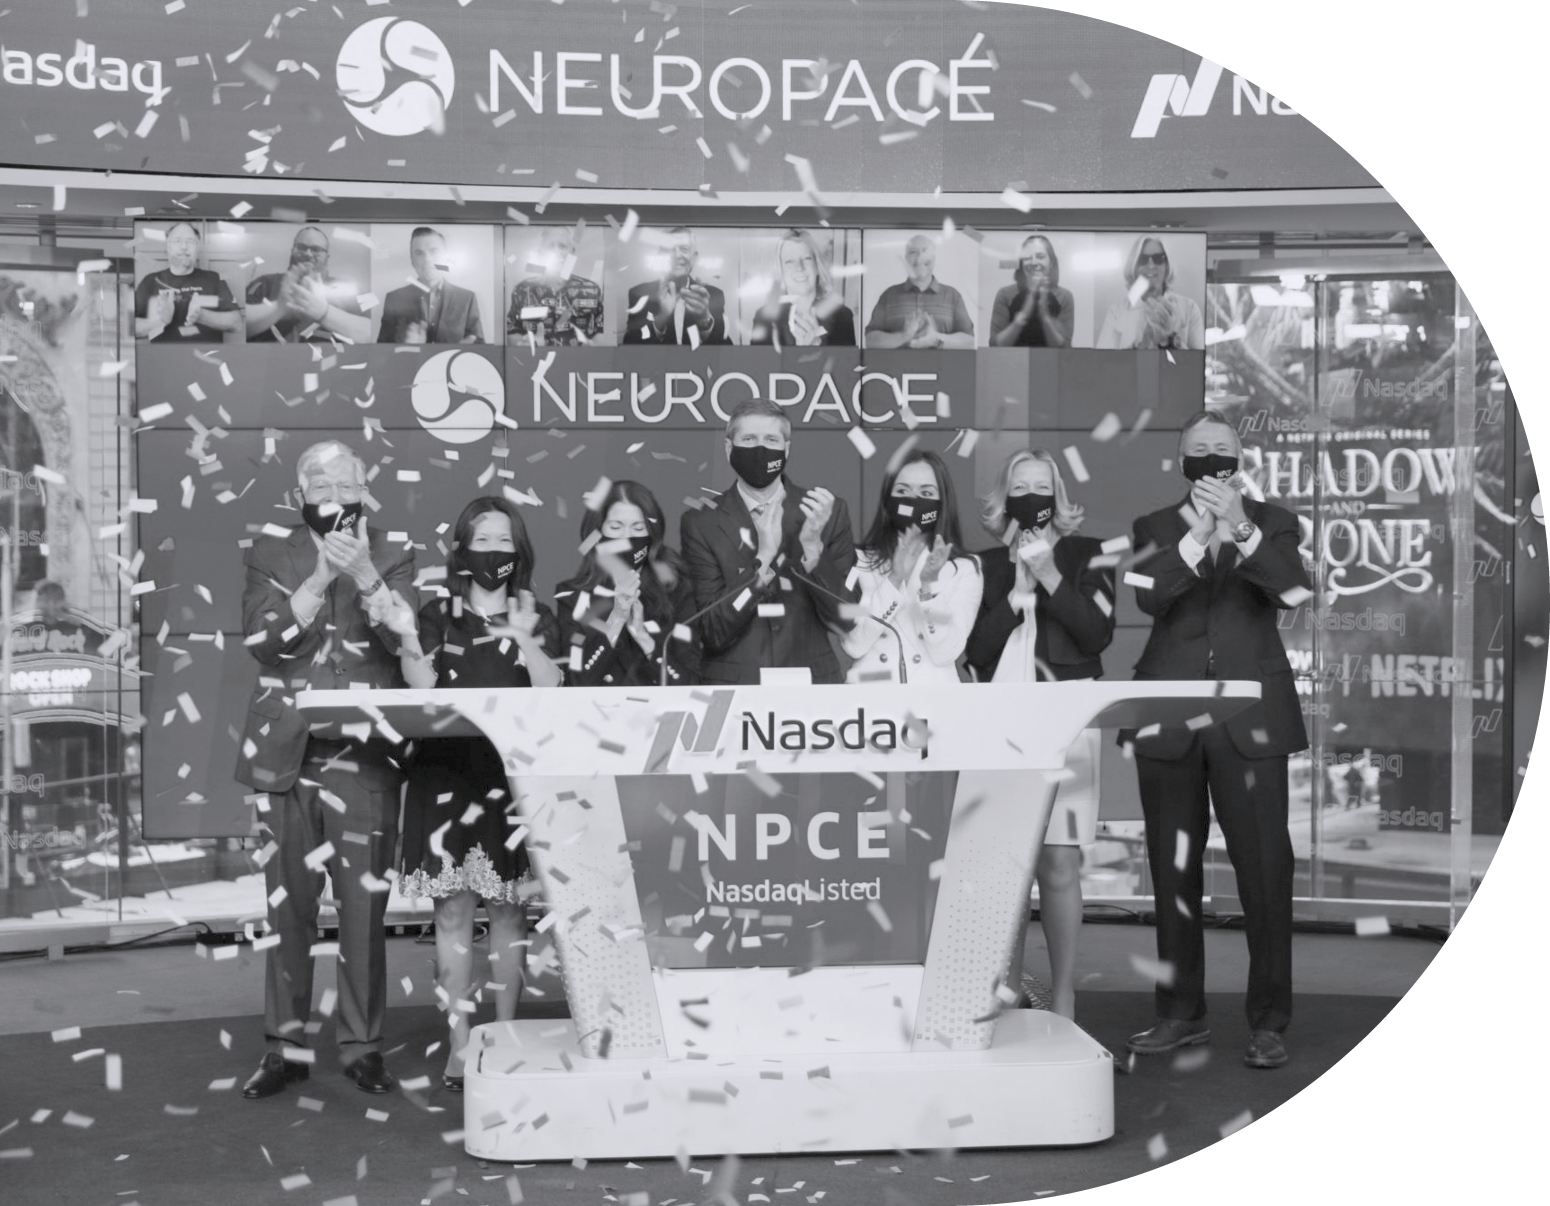 NeuroPace celebrating NASDAQ listing